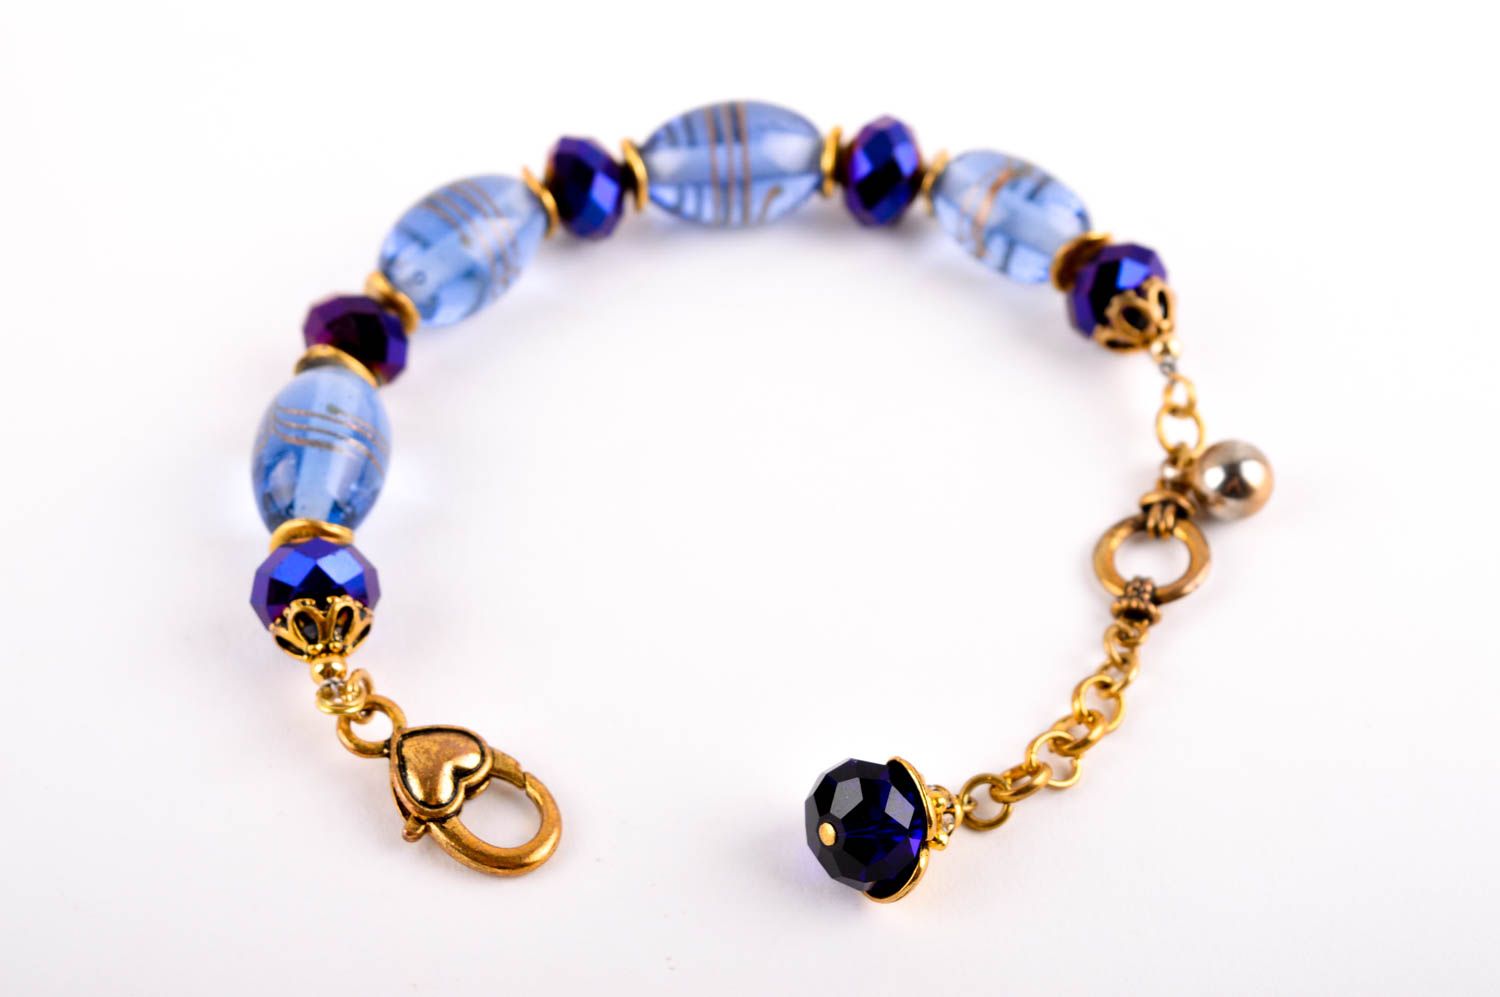 Handmade bracelet with natural stones jewelry stones designer fashion jewelry photo 4